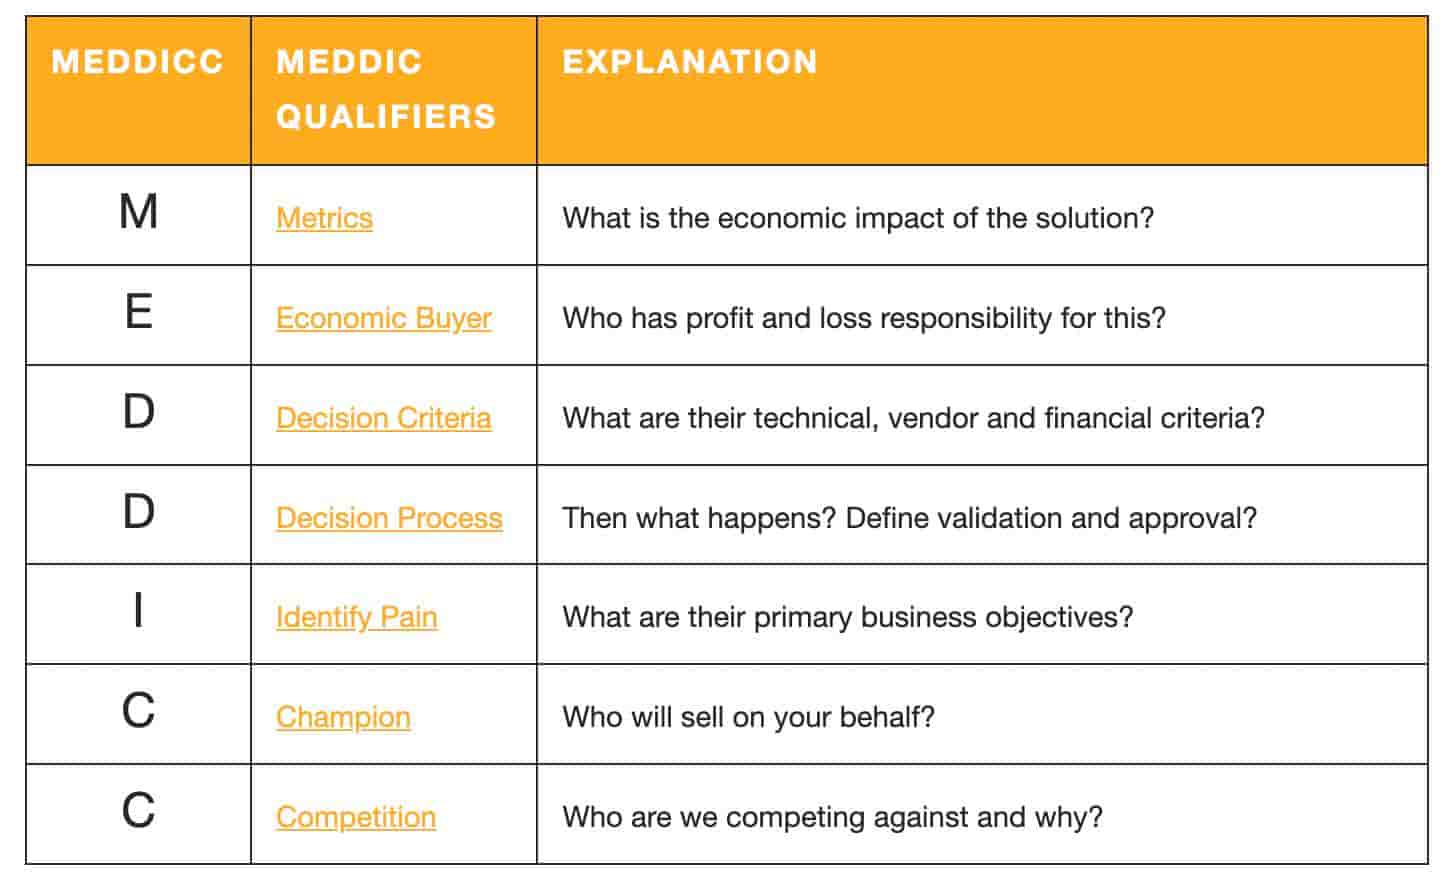  Sales qualification framework, MEDDIC